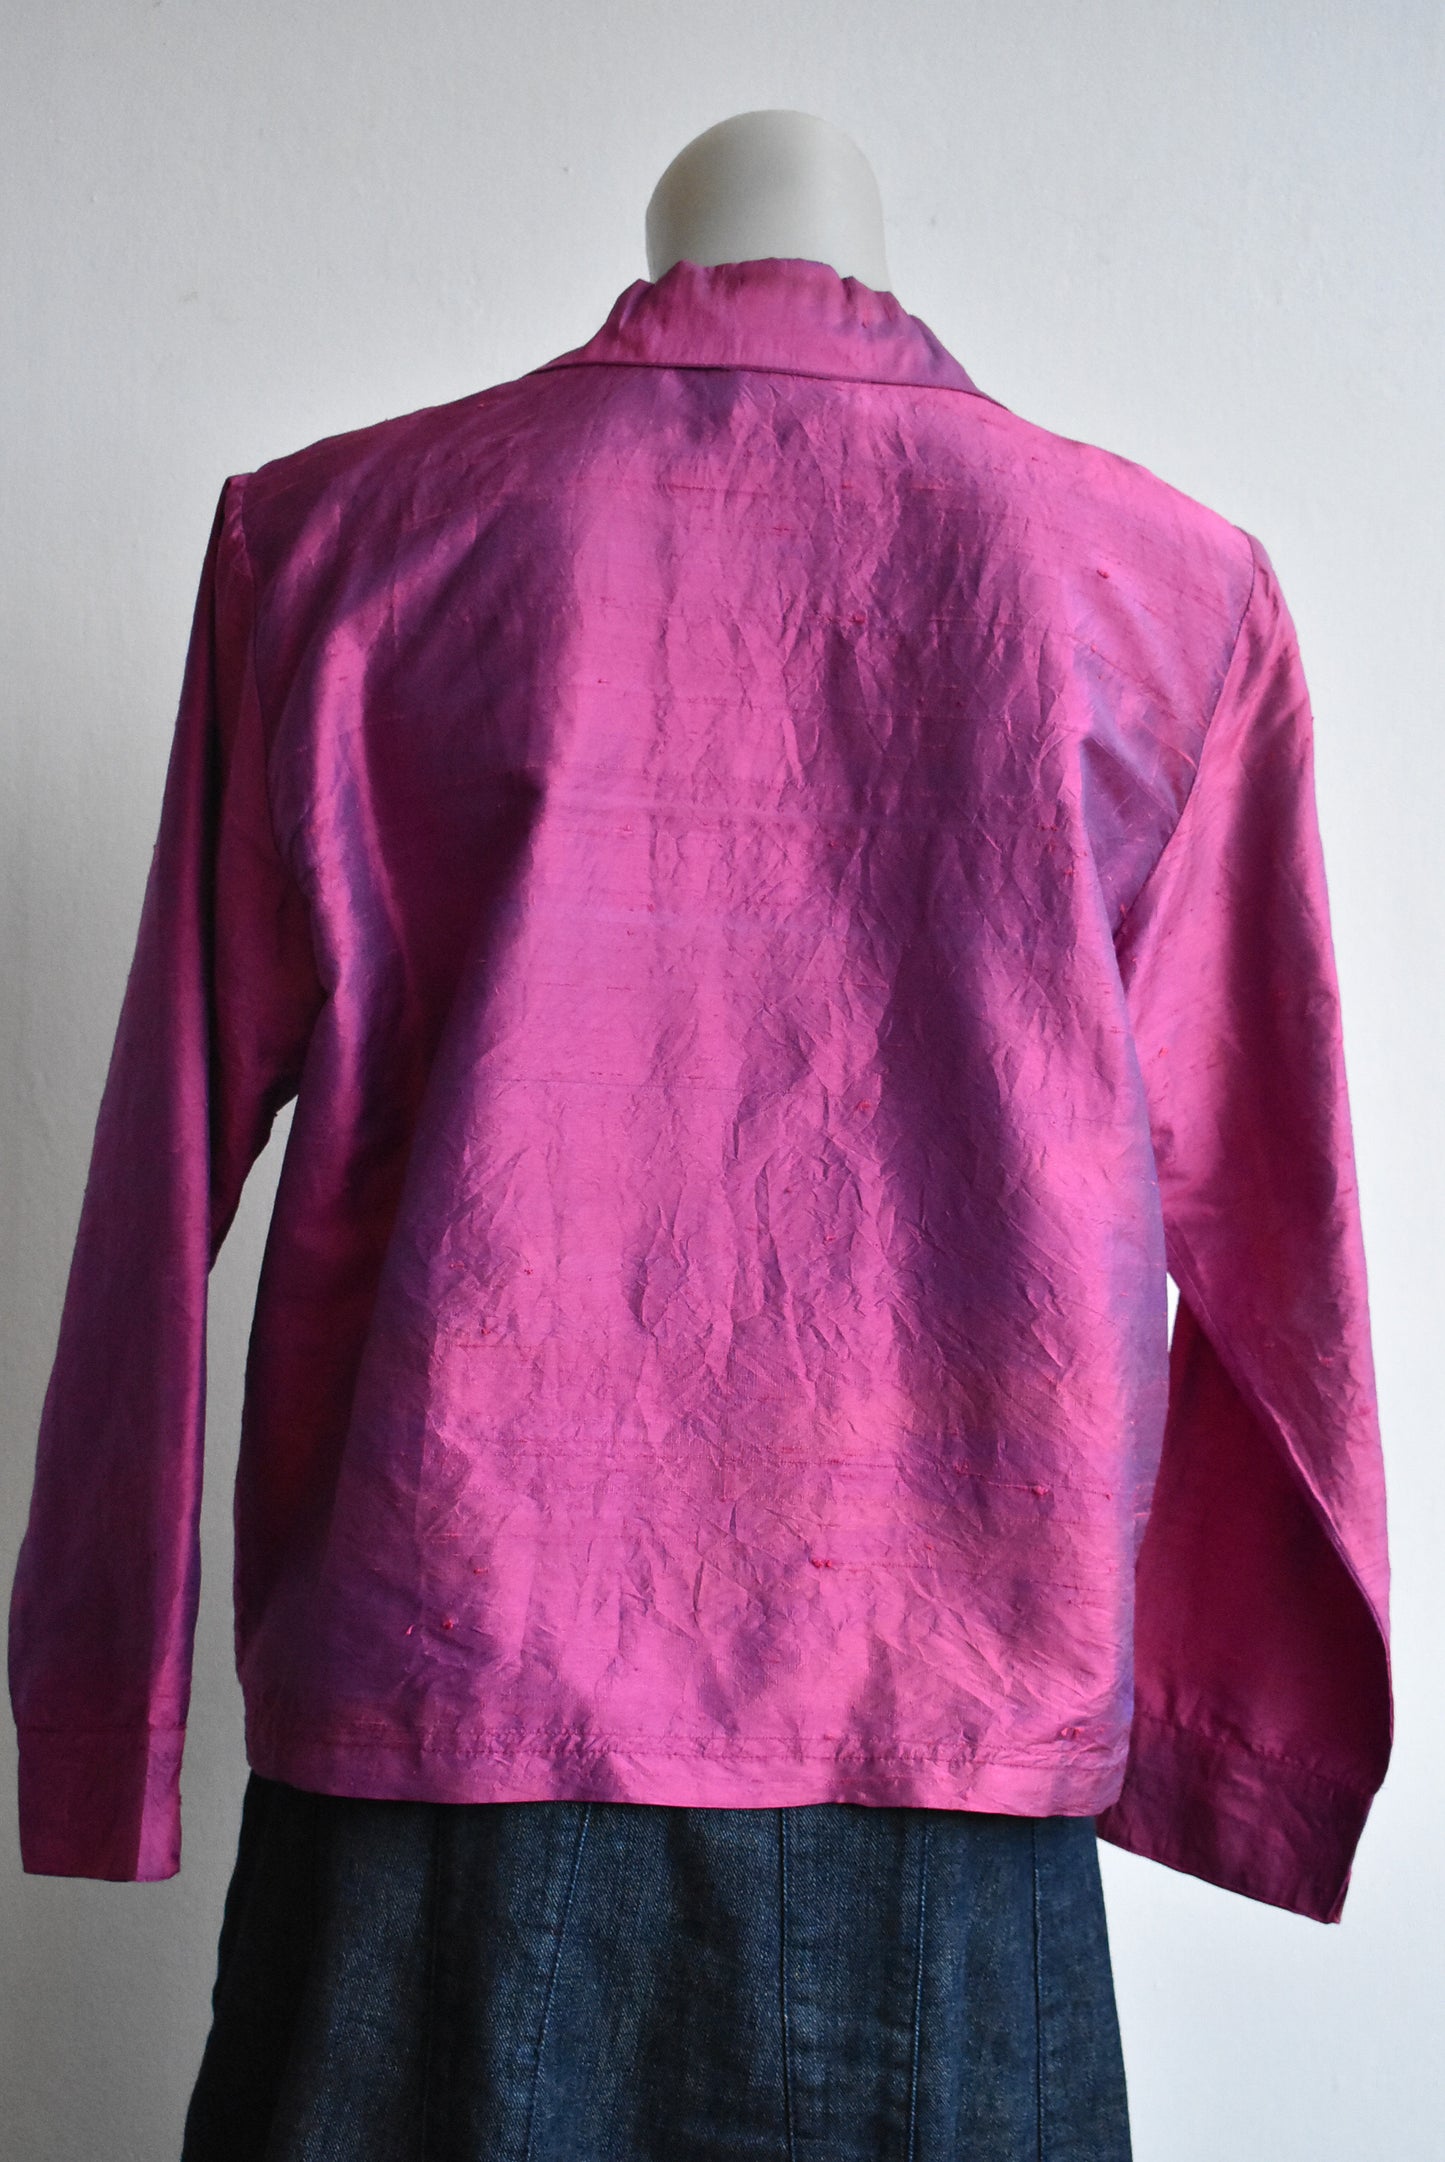 Chico's Design silk iridescent pink shirt. S/M